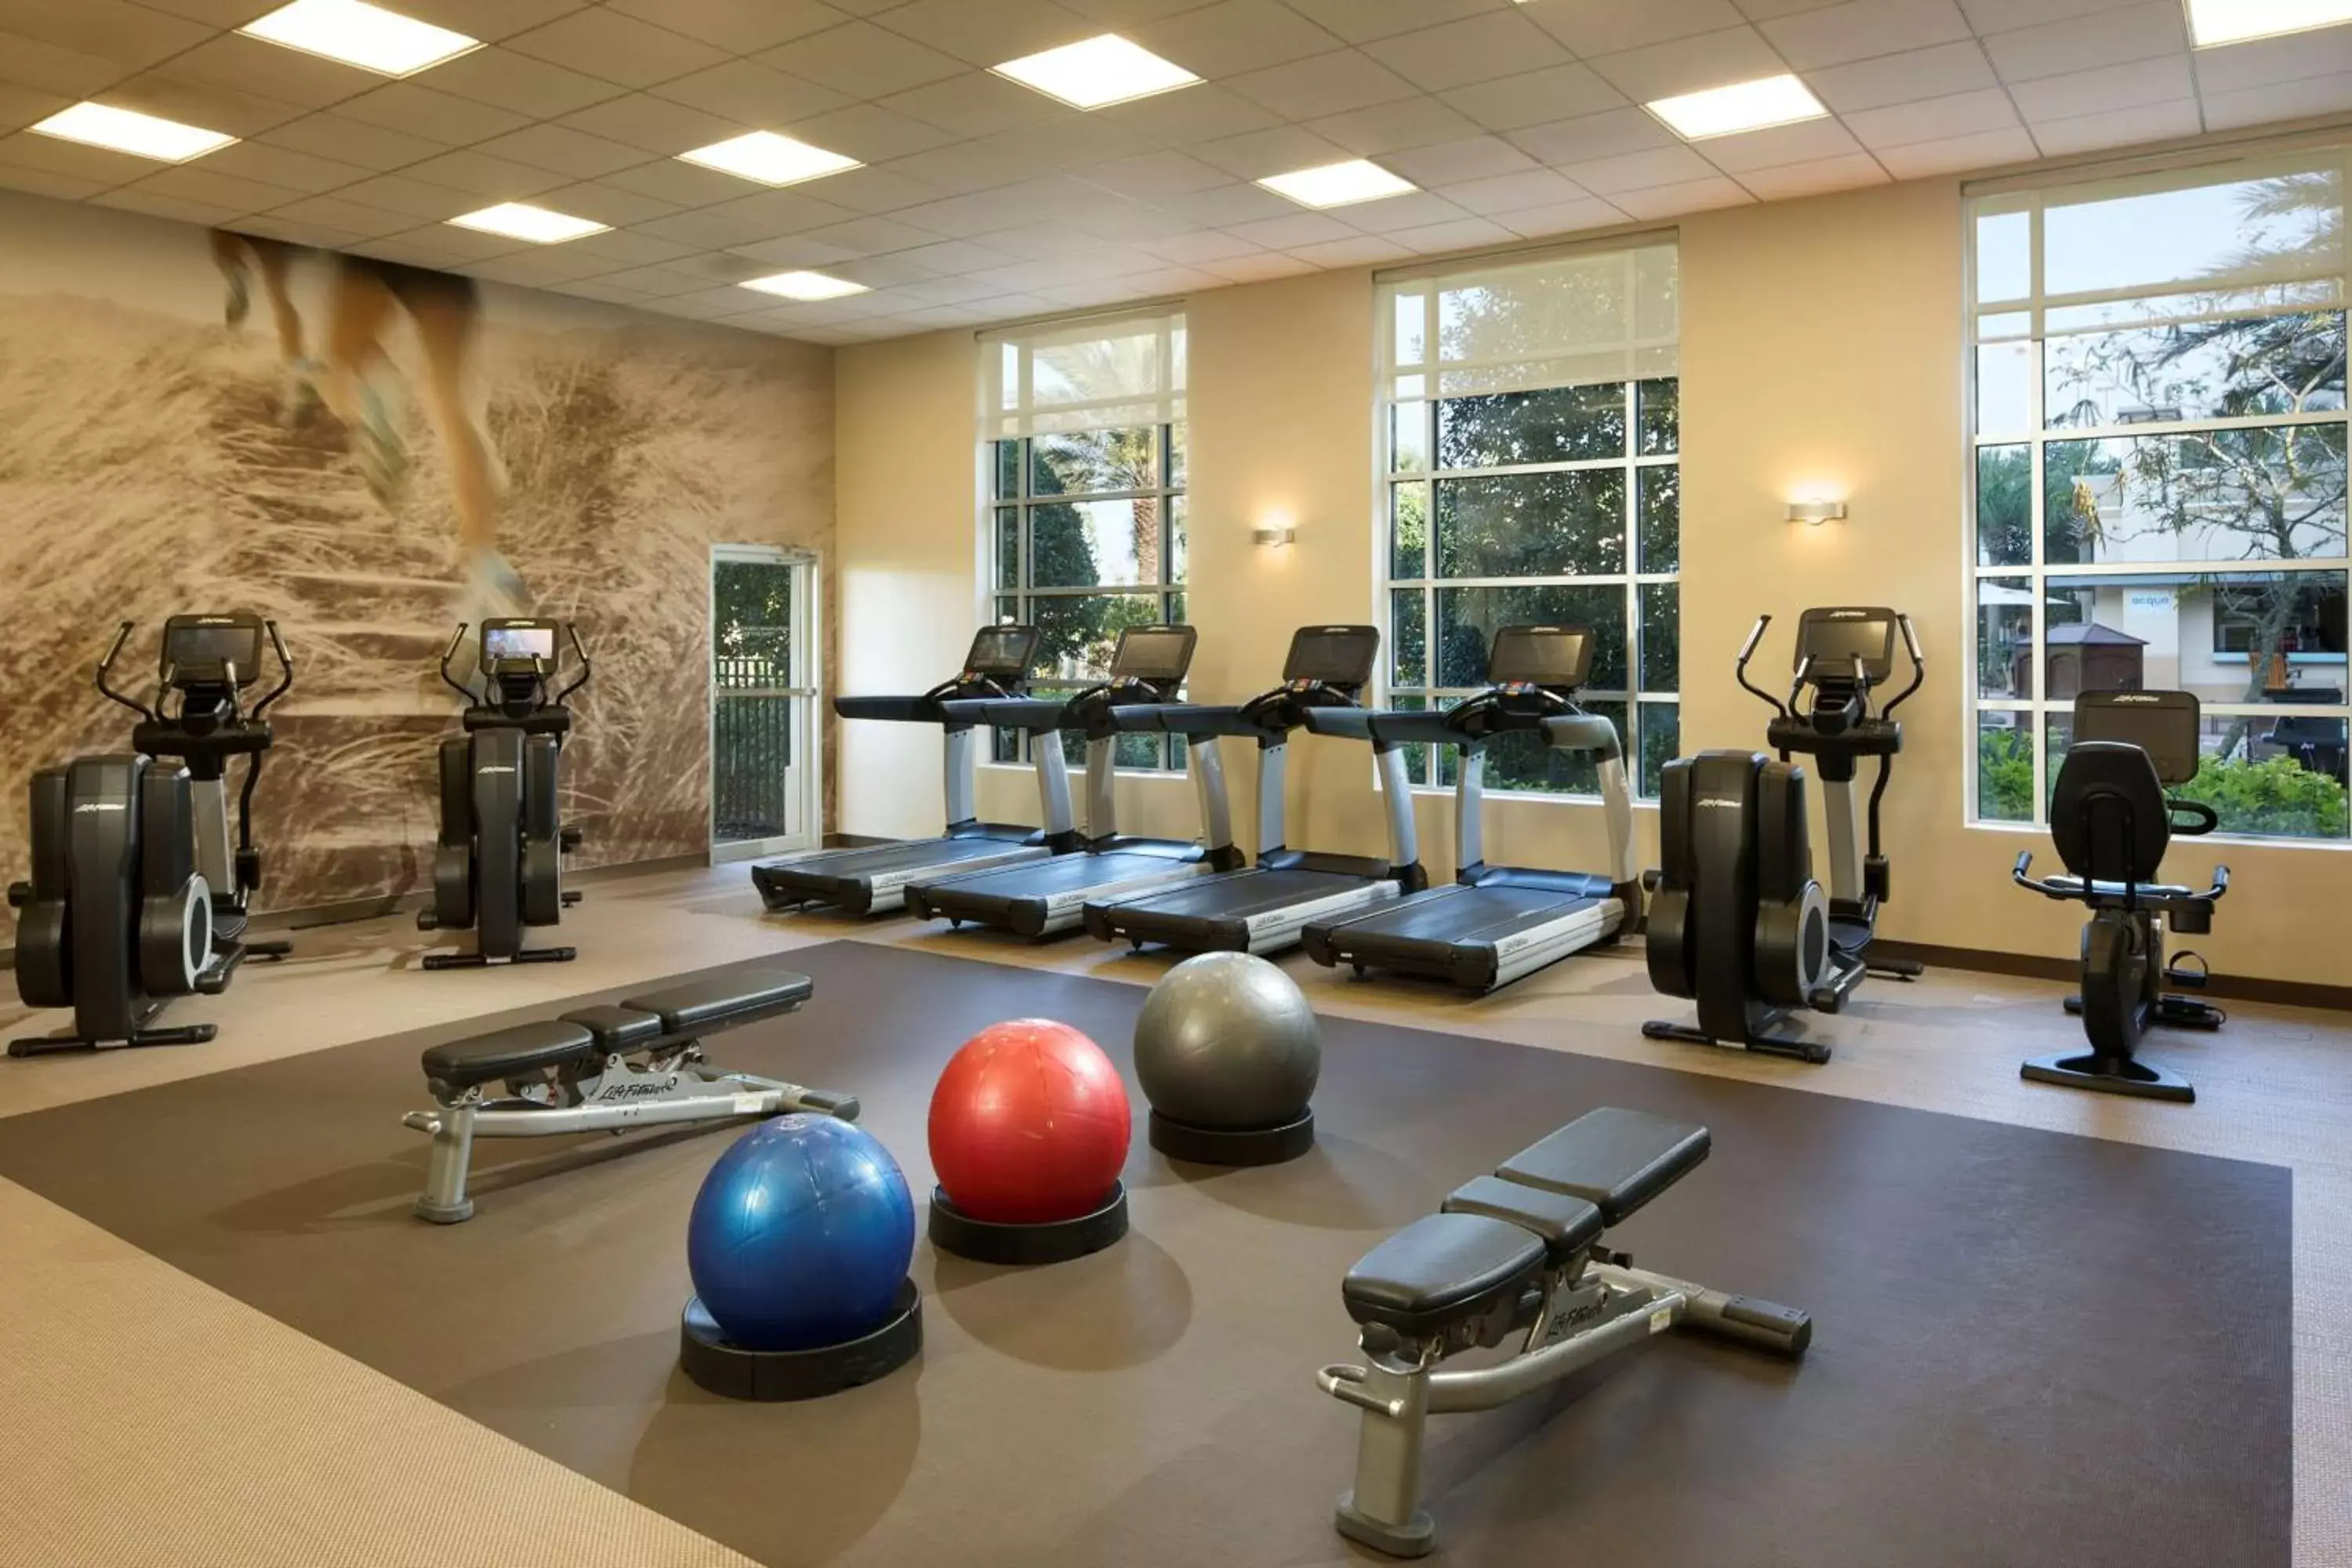 Fitness centre/facilities, Fitness Center/Facilities in Hilton Grand Vacations Club Las Palmeras Orlando